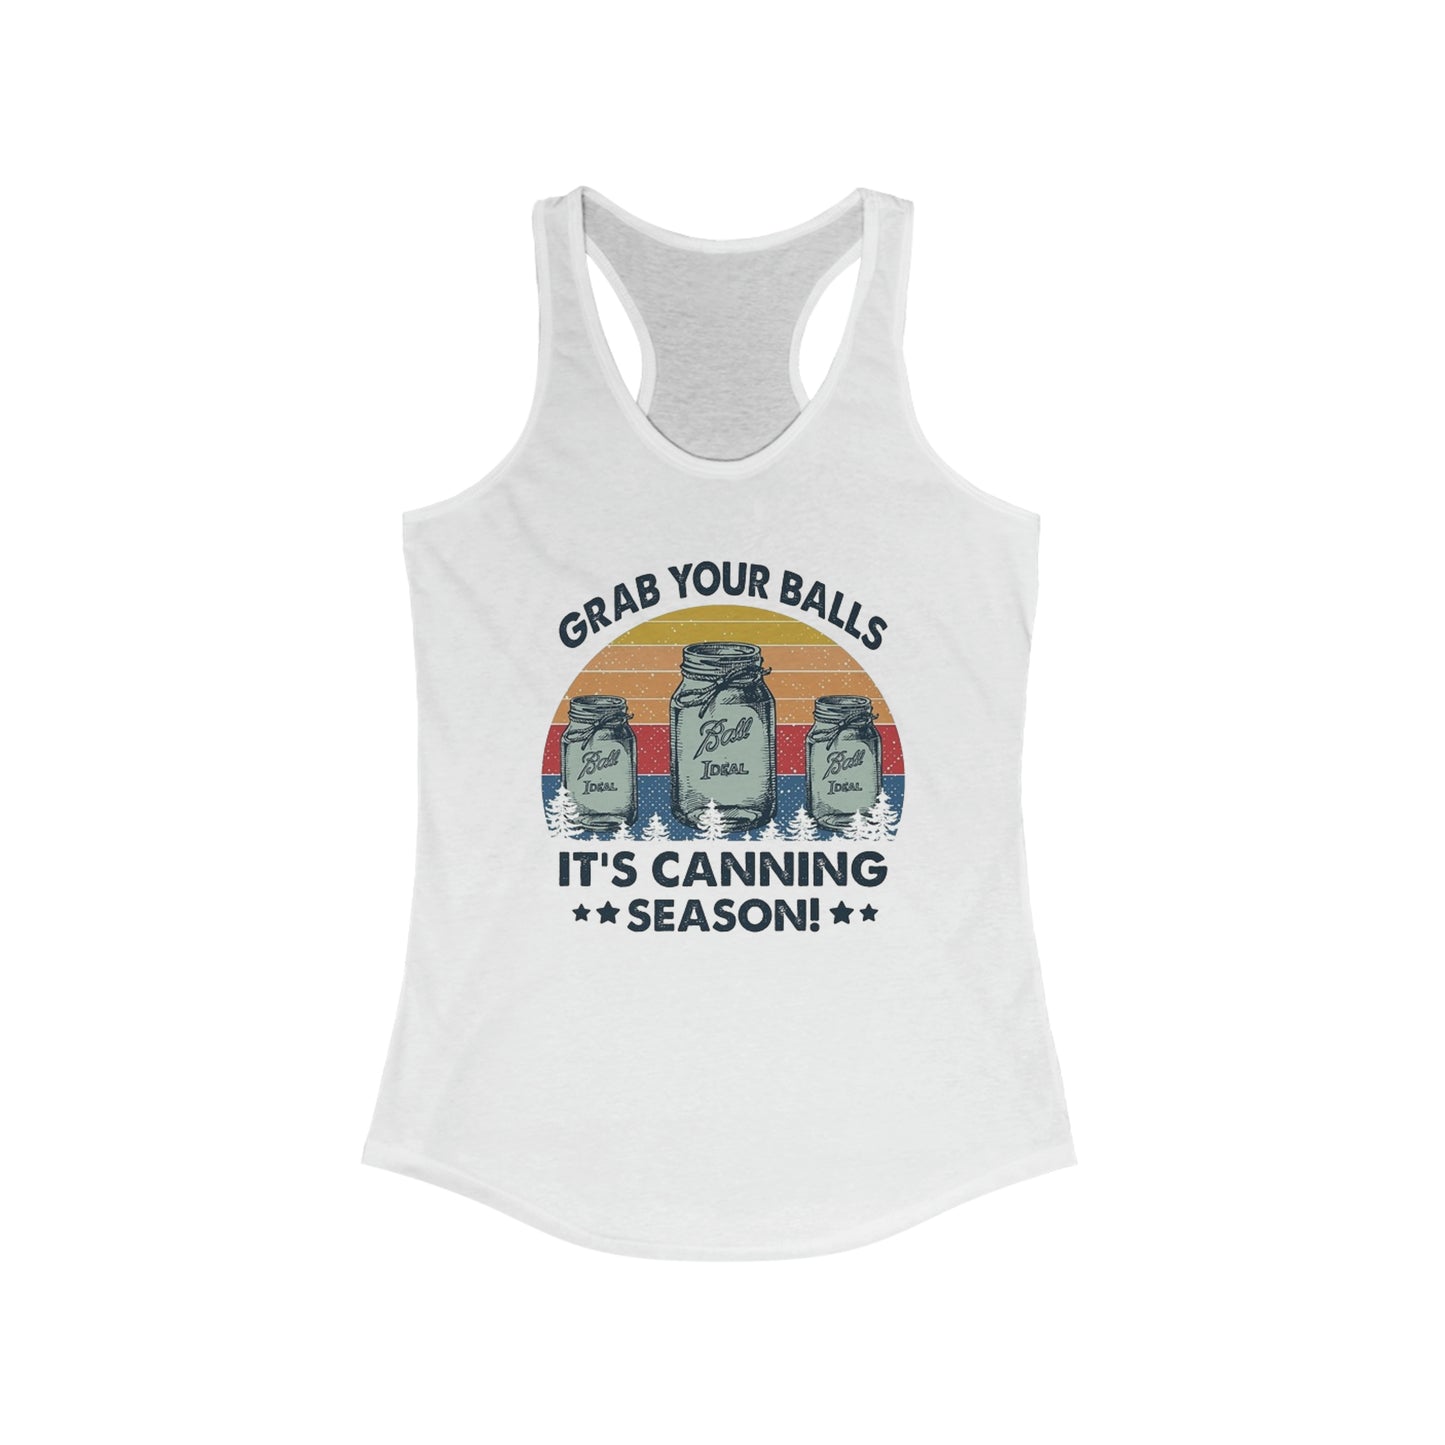 Grab Your Balls It's Canning Season - Women's Ideal Racerback Tank